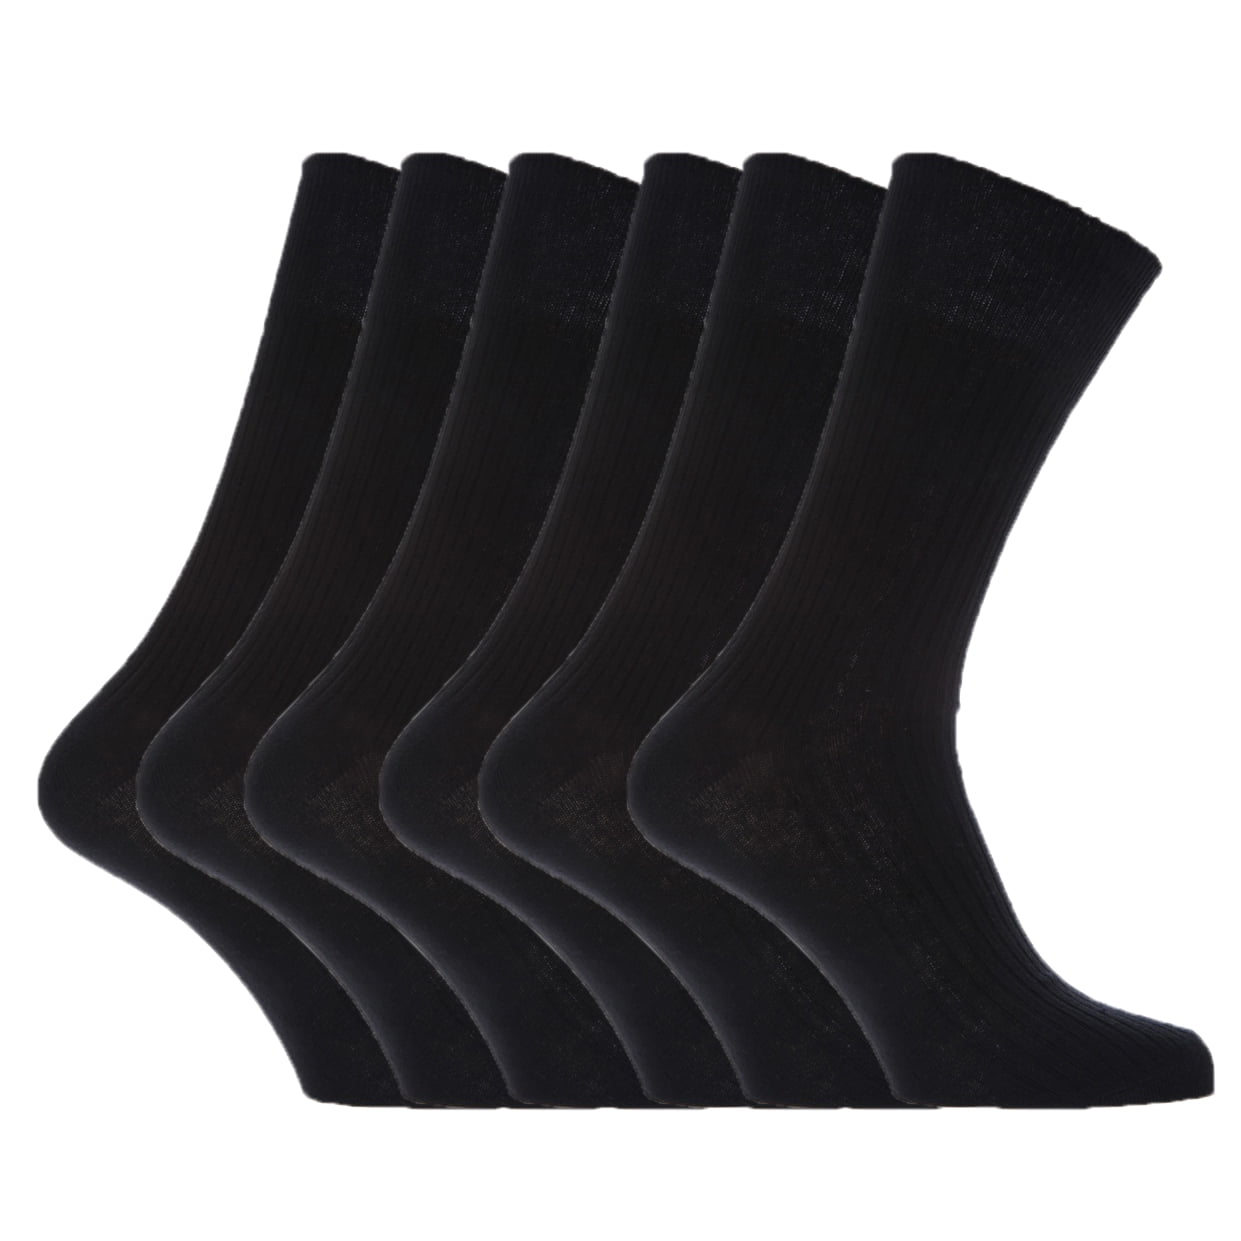 Viewk 1 Pair Unisex Non Elastic 100% Pure Cotton Socks Comfort Soft Grip Diabetic 